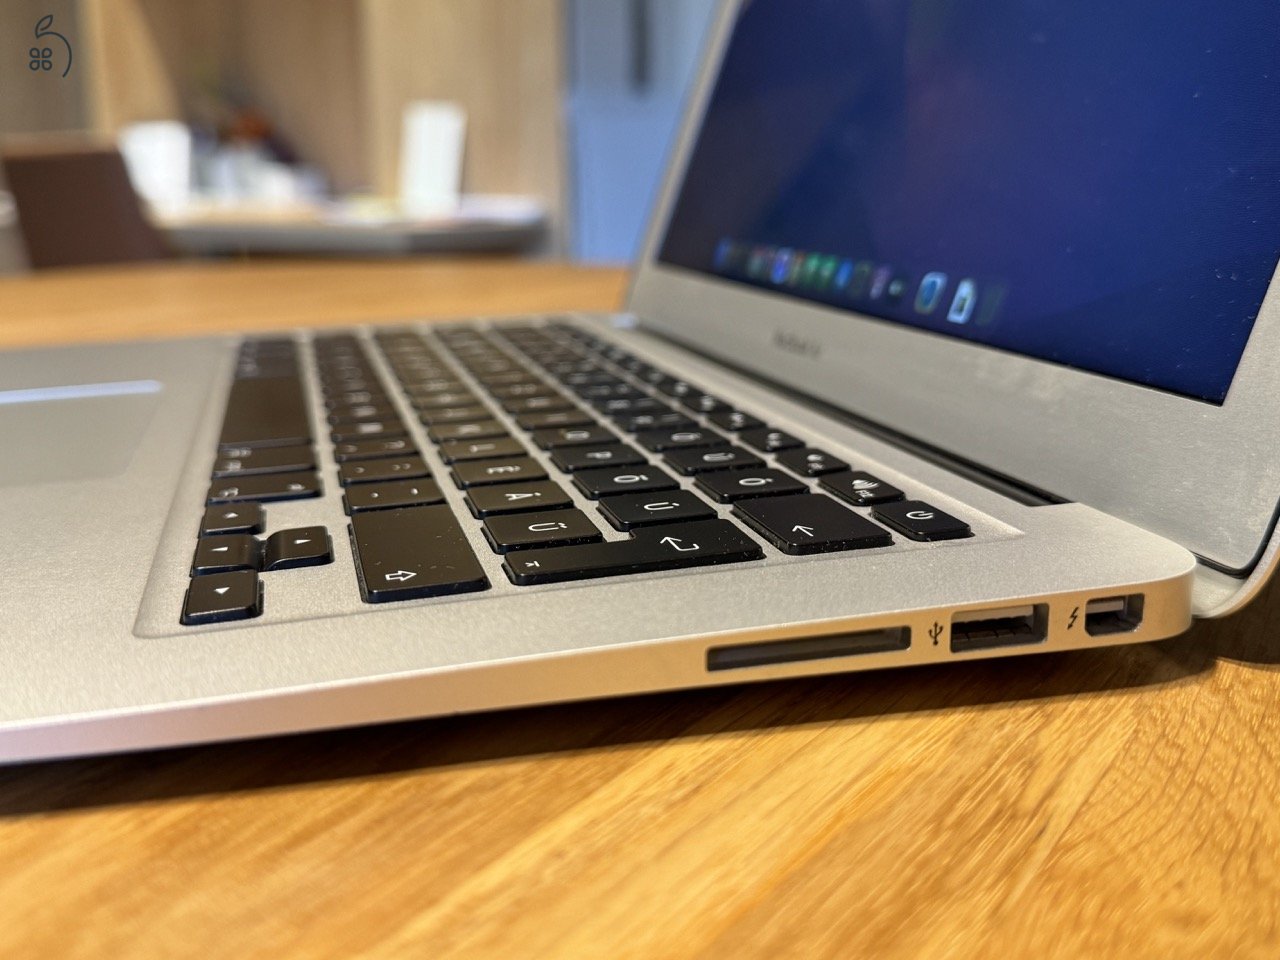 MacBook Air 13 (2017) i5 8GB RAM 128GB SSD új akksival eladó